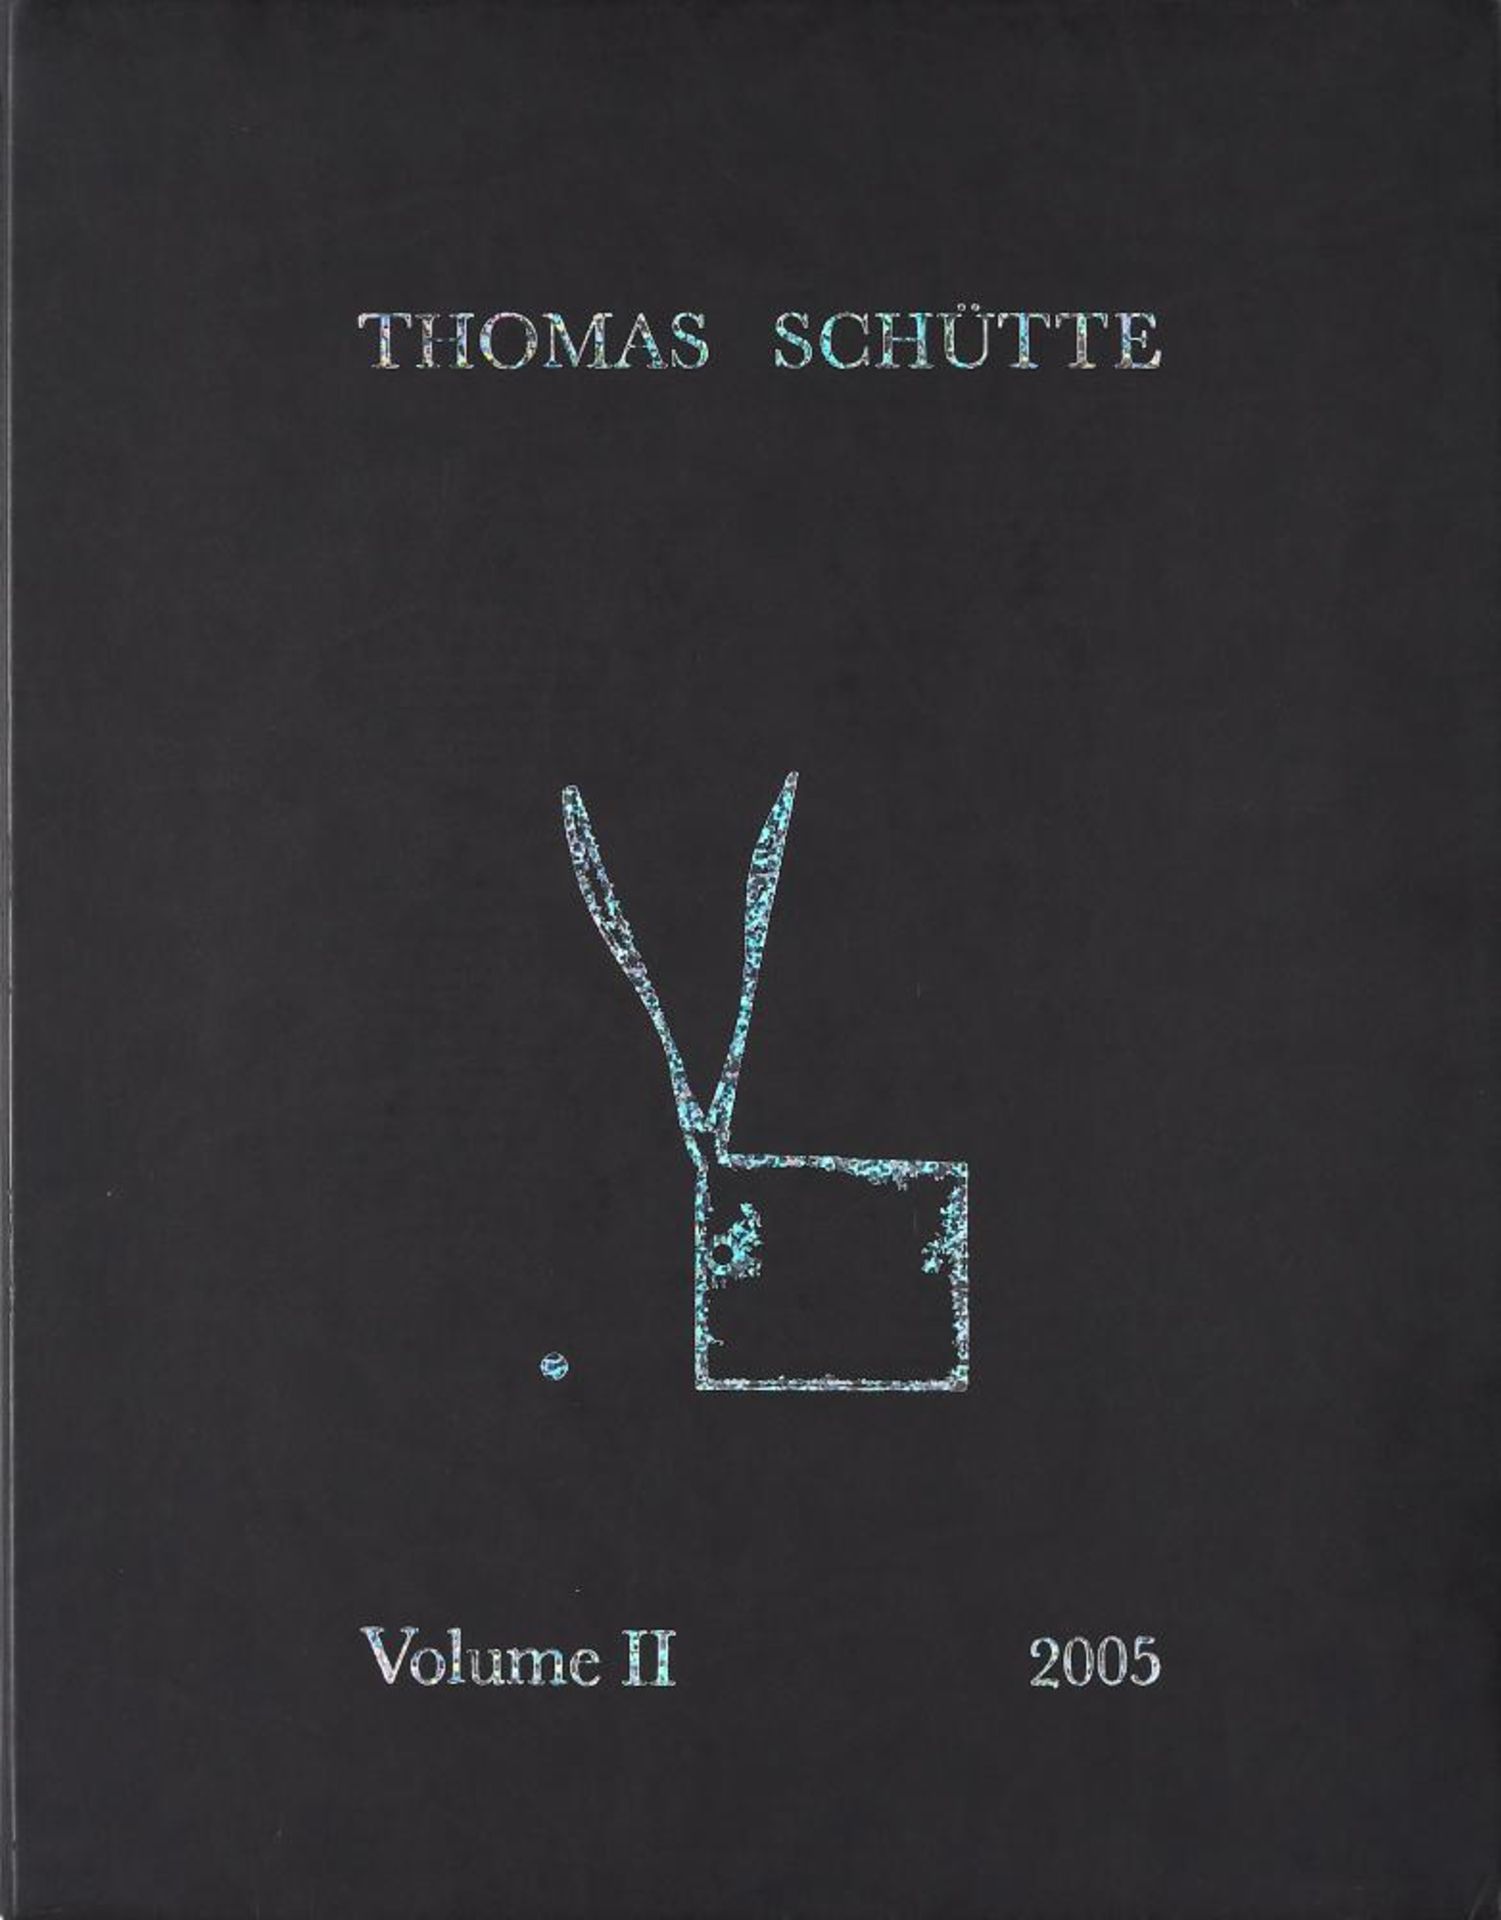 Thomas Schütte: Thomas Schütte Volume II - Image 7 of 8